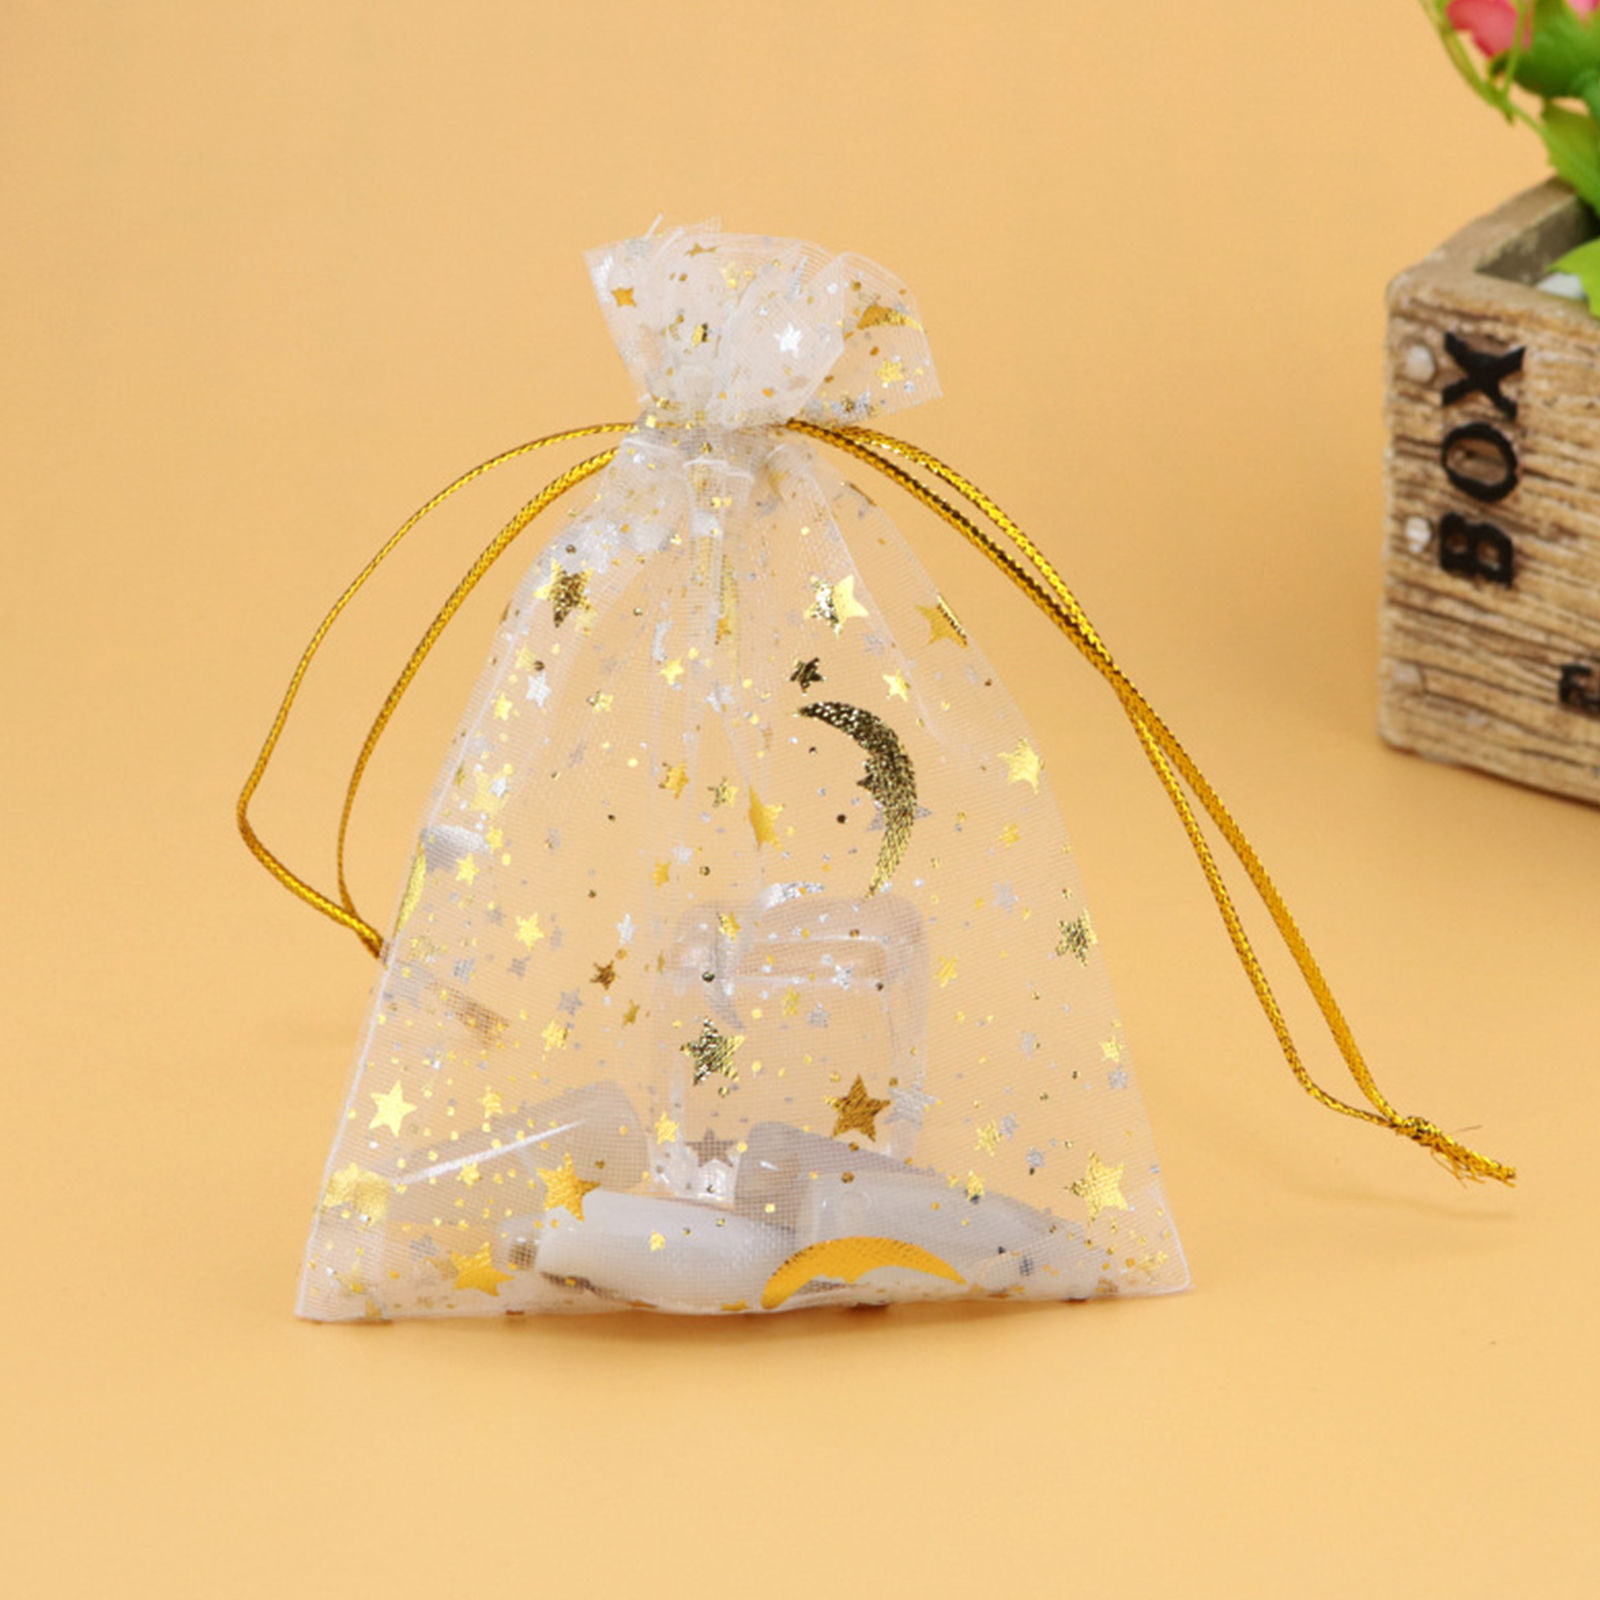 Picture of Wedding Gift Organza Galaxy Drawstring Bags Half Moon White Star 12cm x9cm(4 6/8" x3 4/8"), 20 PCs